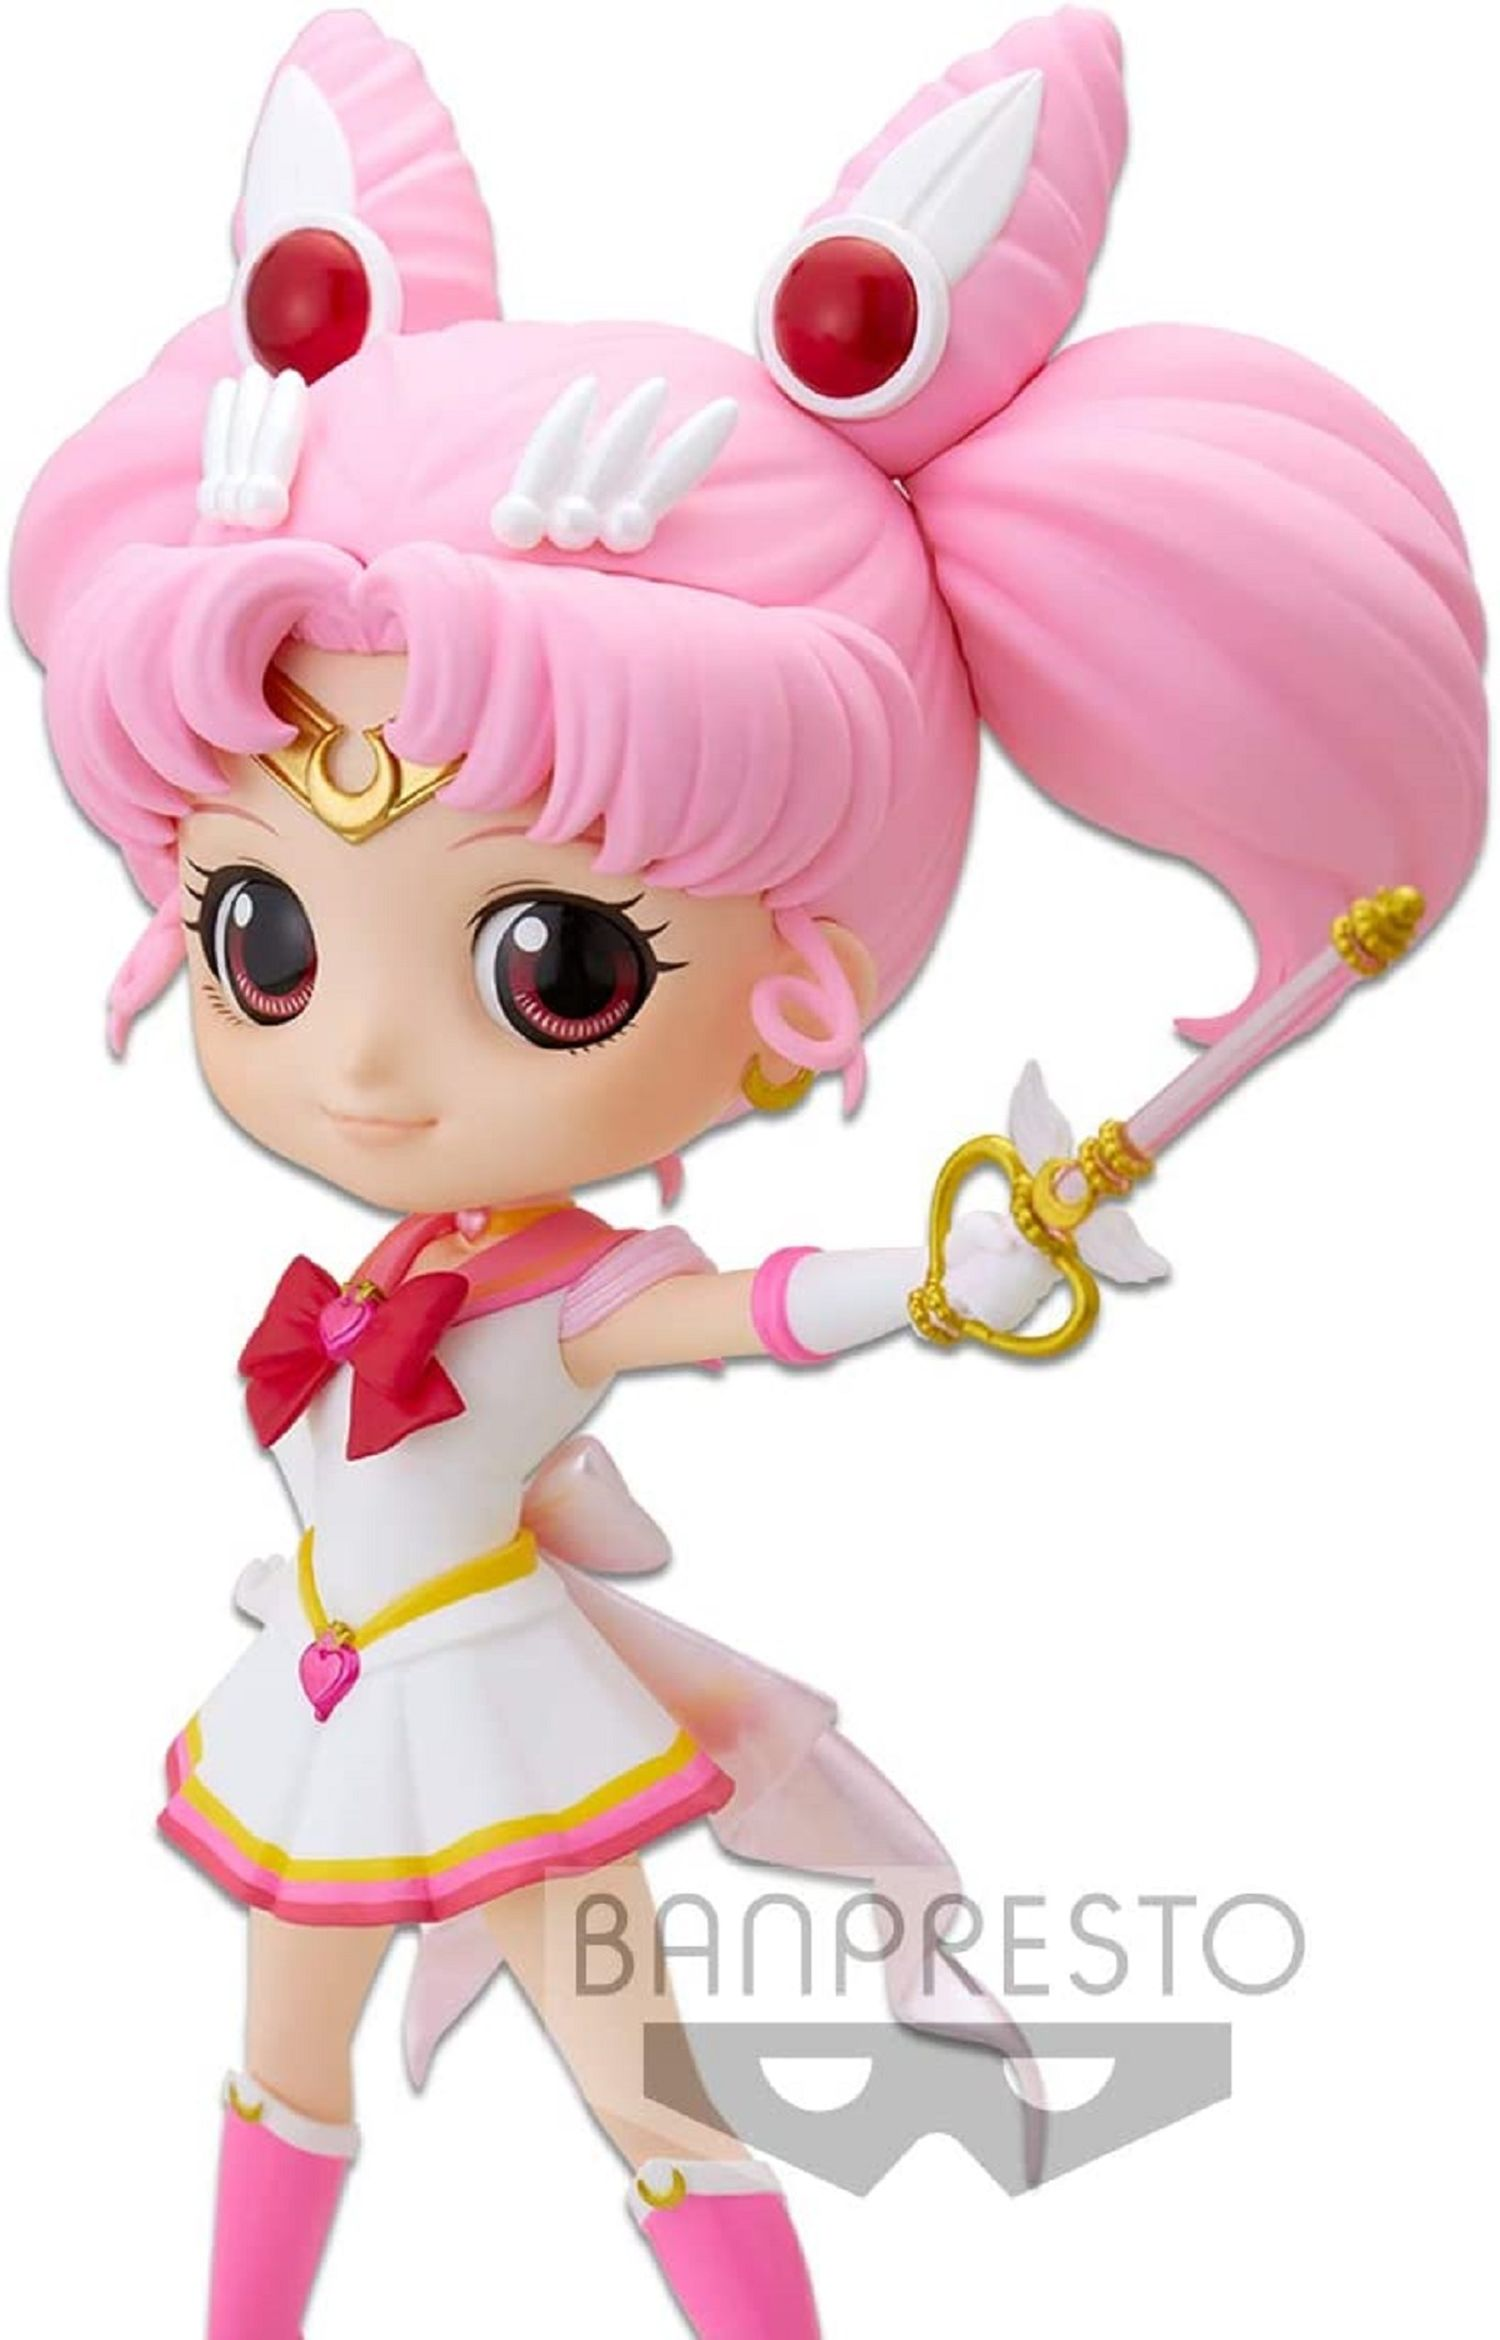 Eternal COFI Q Chibi Pink cm – Posket Sailor Moon 14 – – Banpresto Sammelfigur Moon Figur